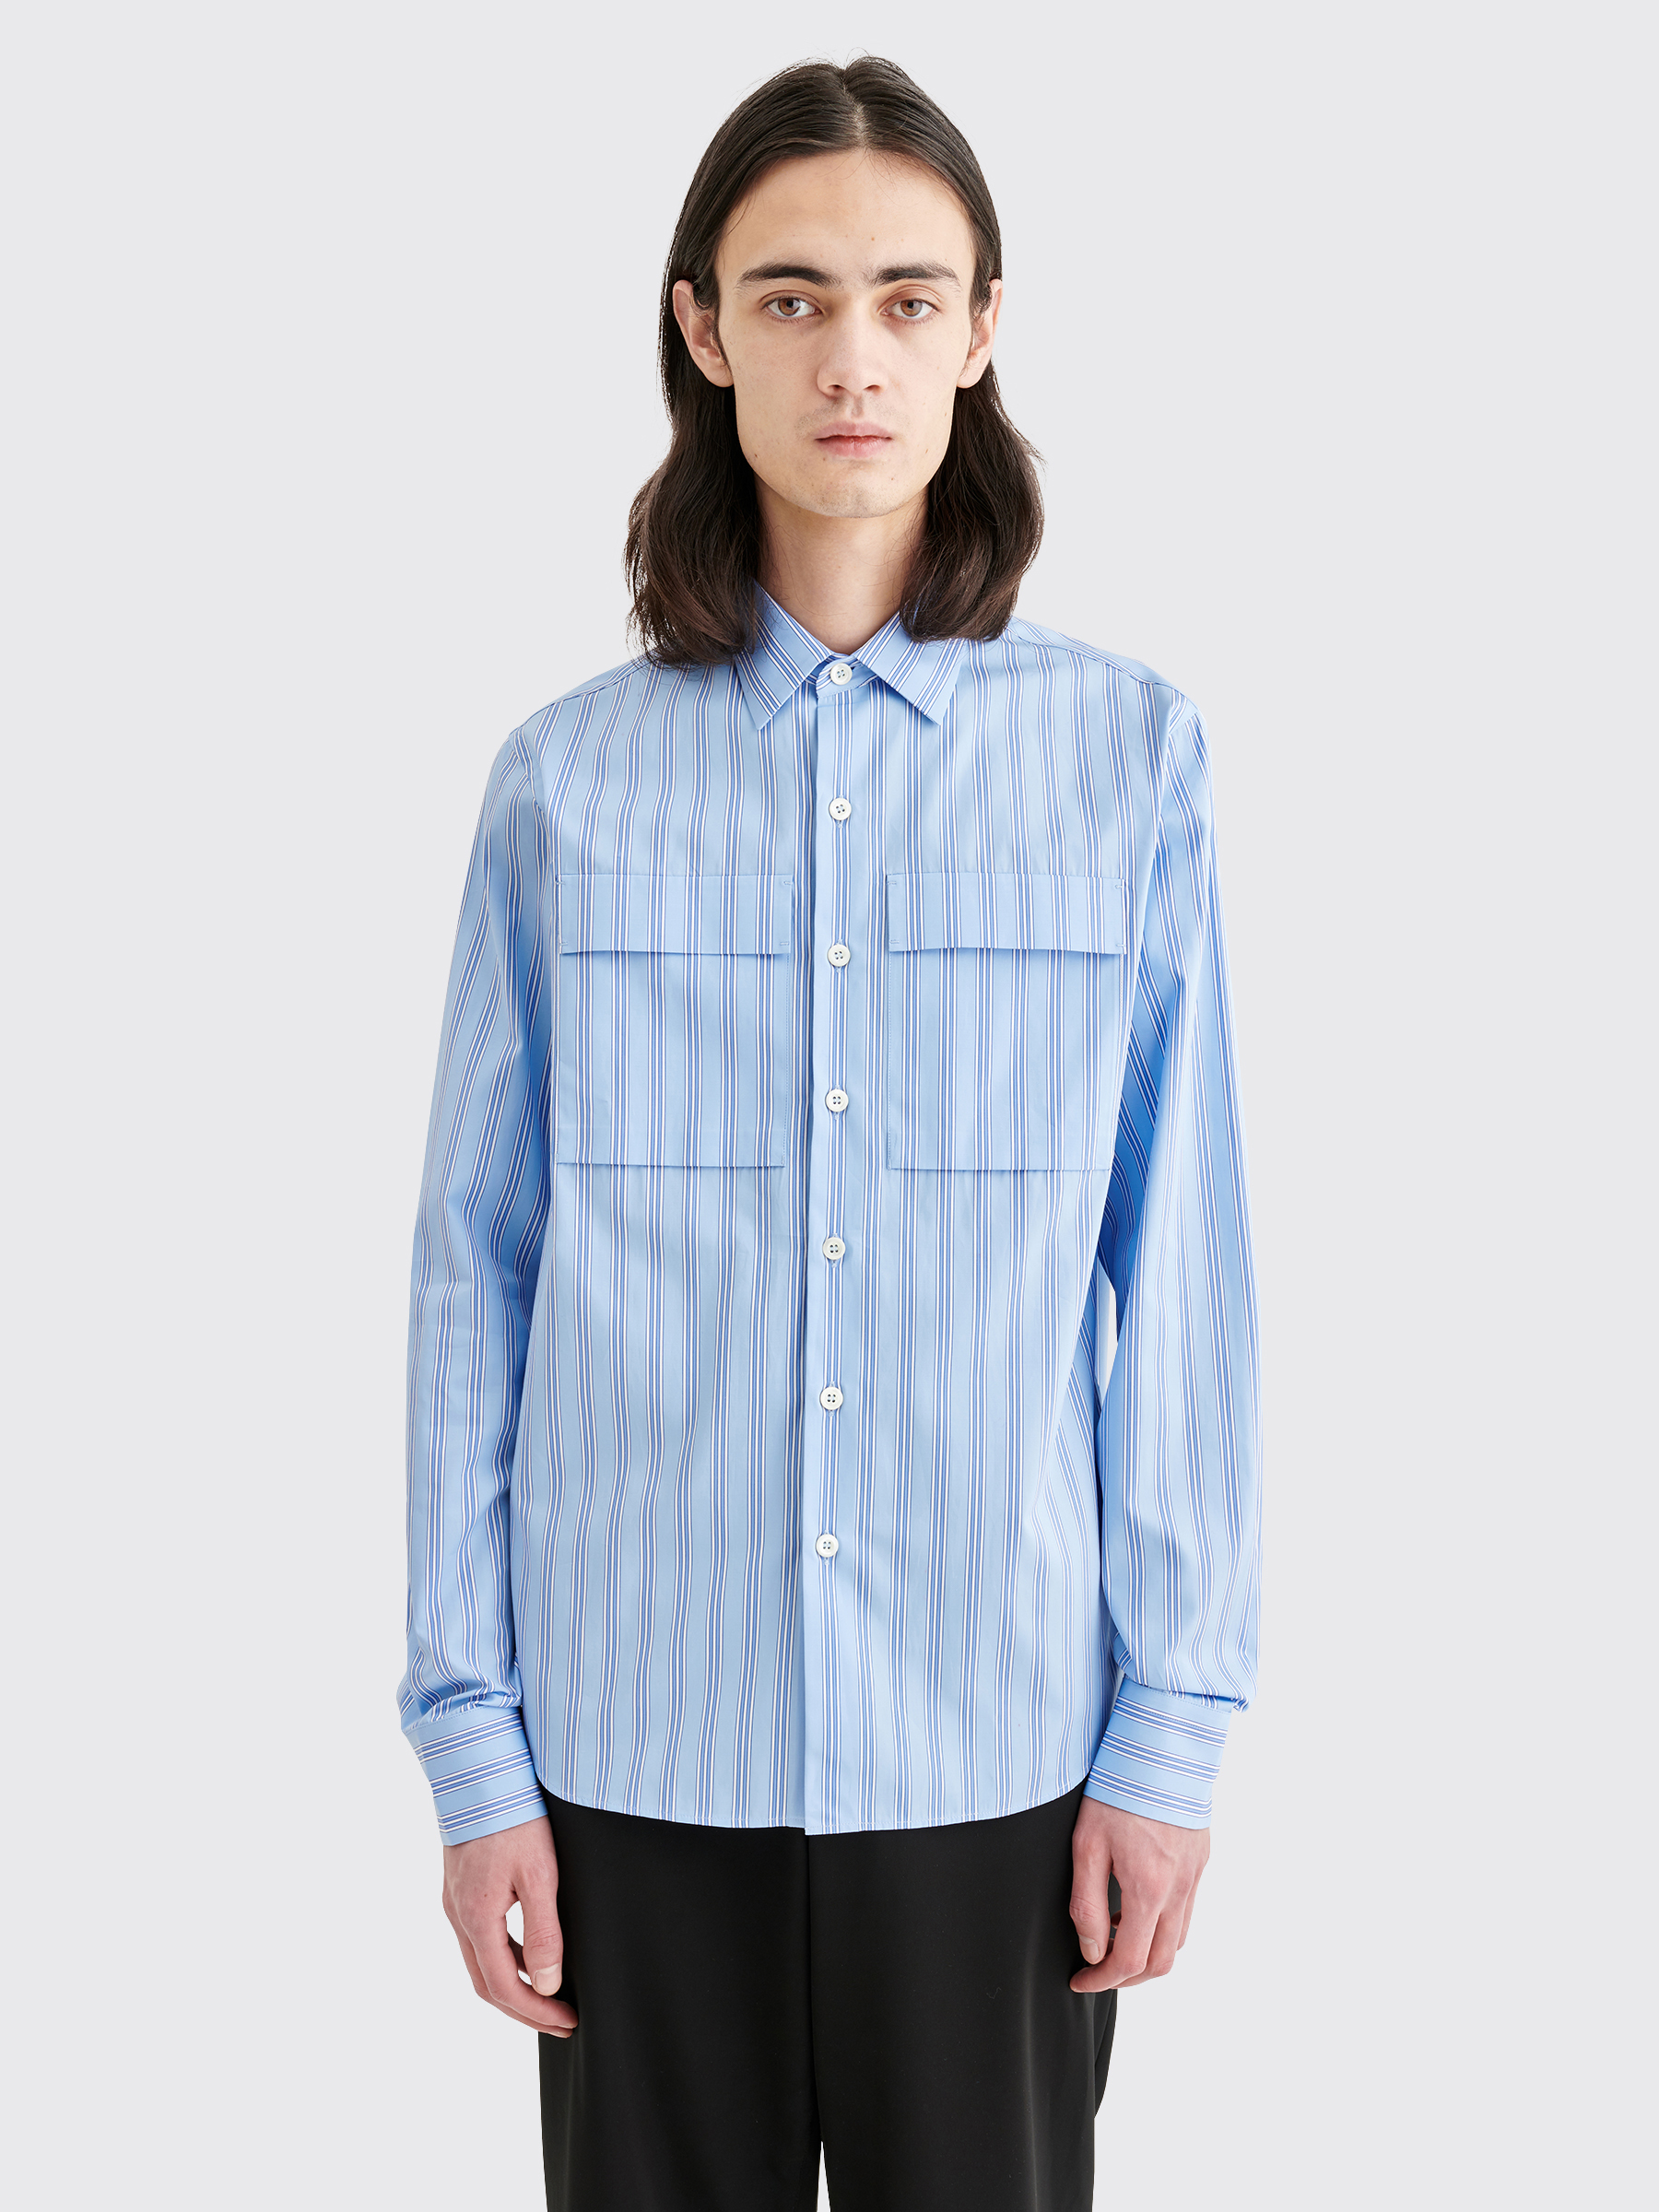 Très Bien - Prada Poplin Pocket Shirt Stripe Blue